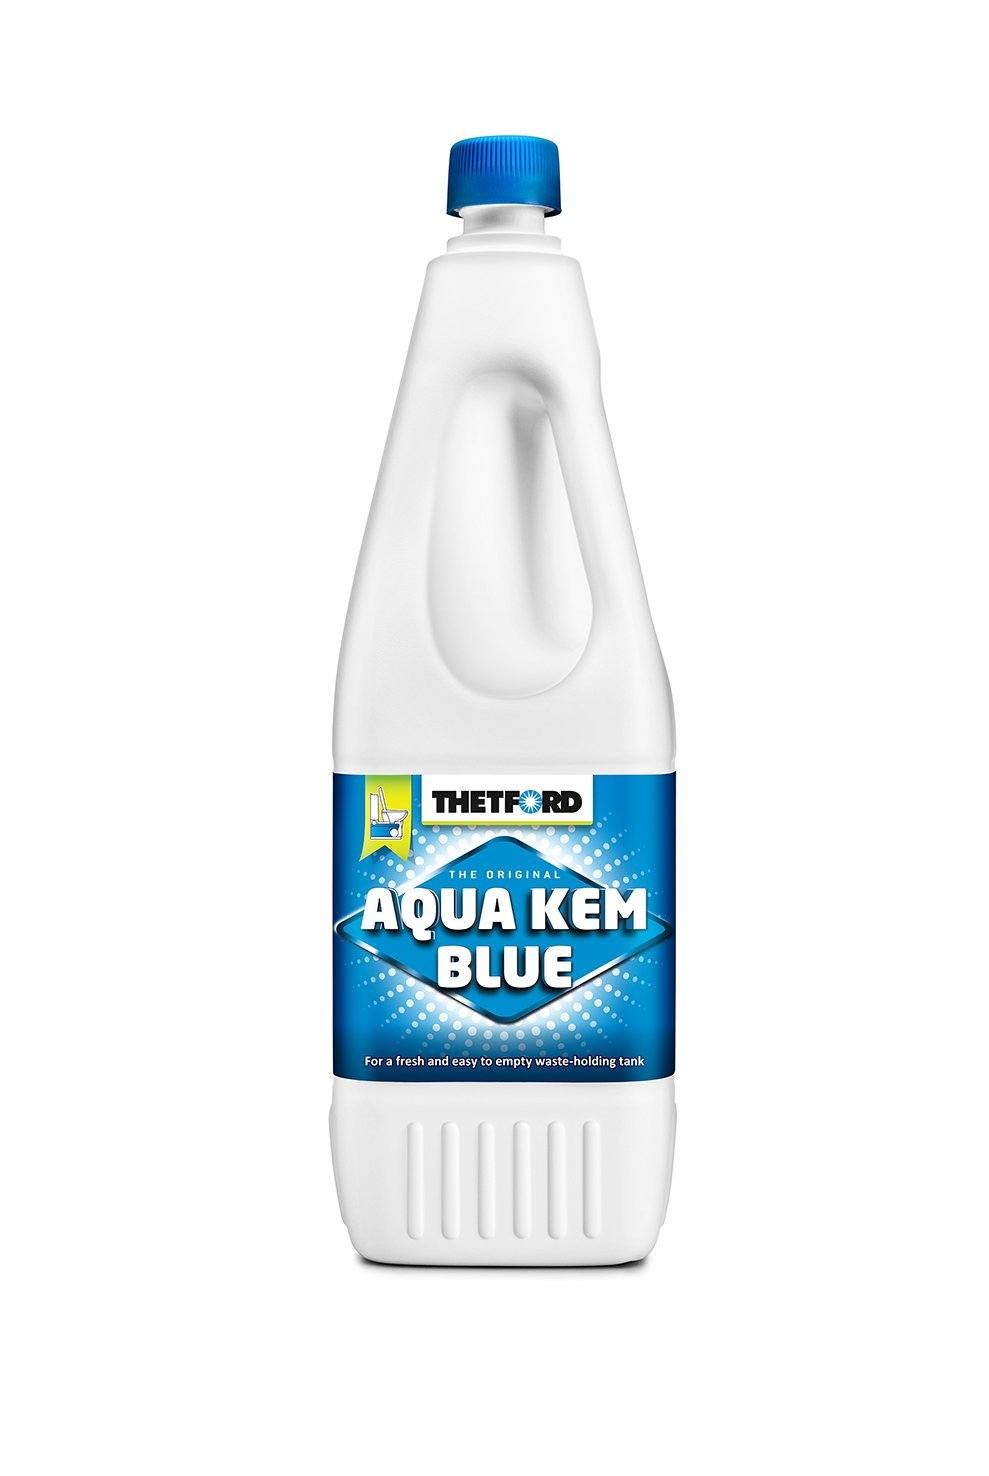 The blue camping toilet liquid